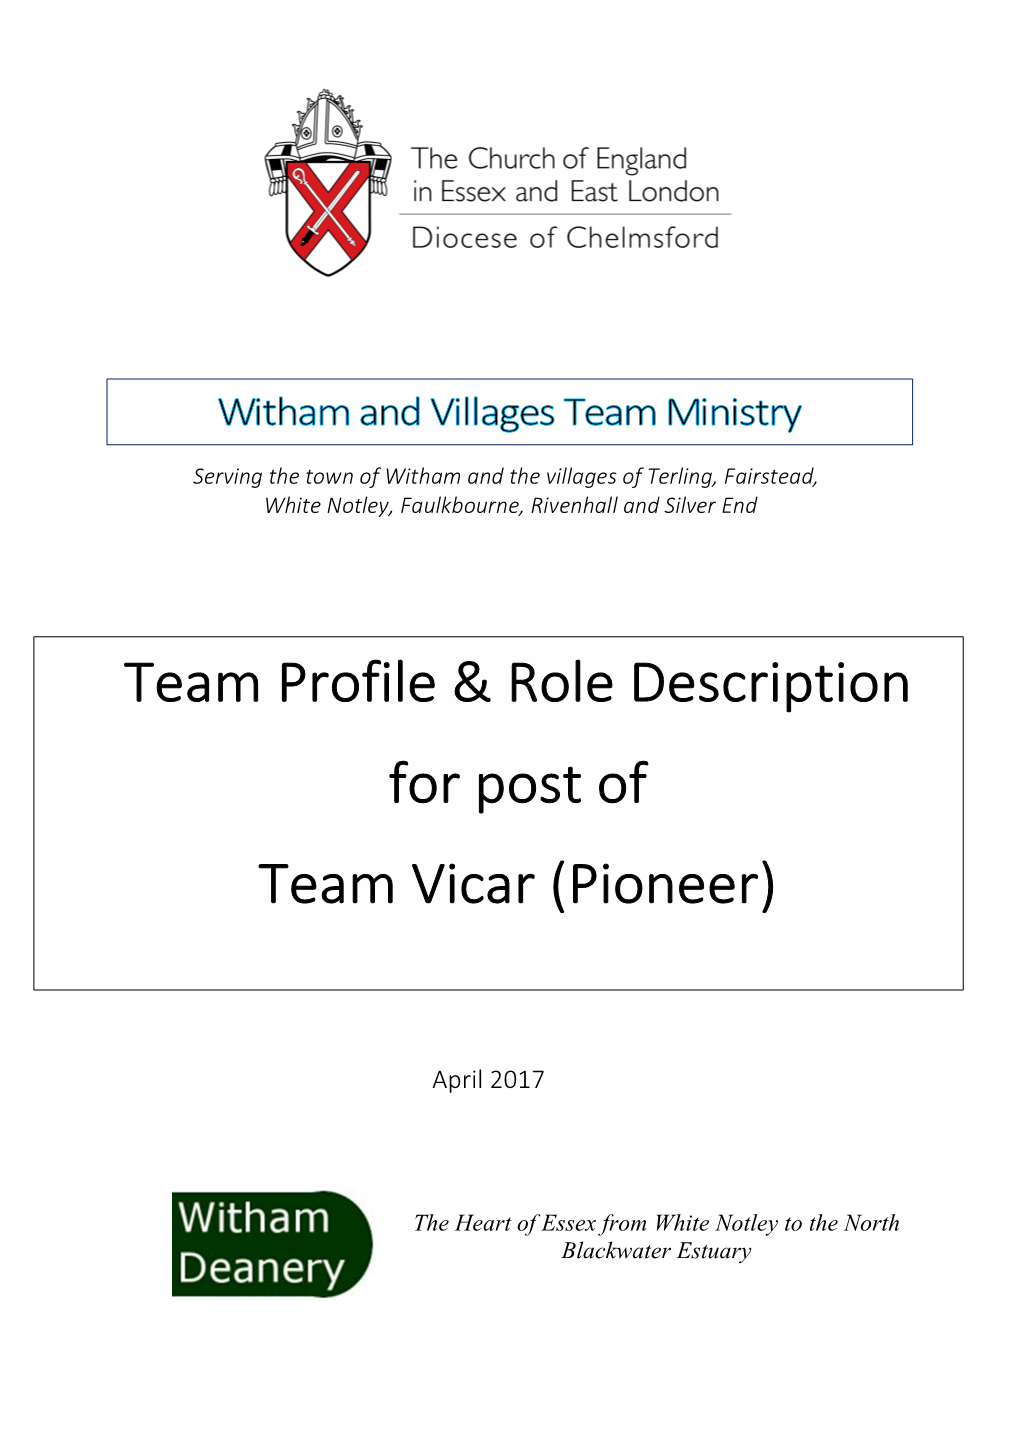 WVTM Team Profile April 2017